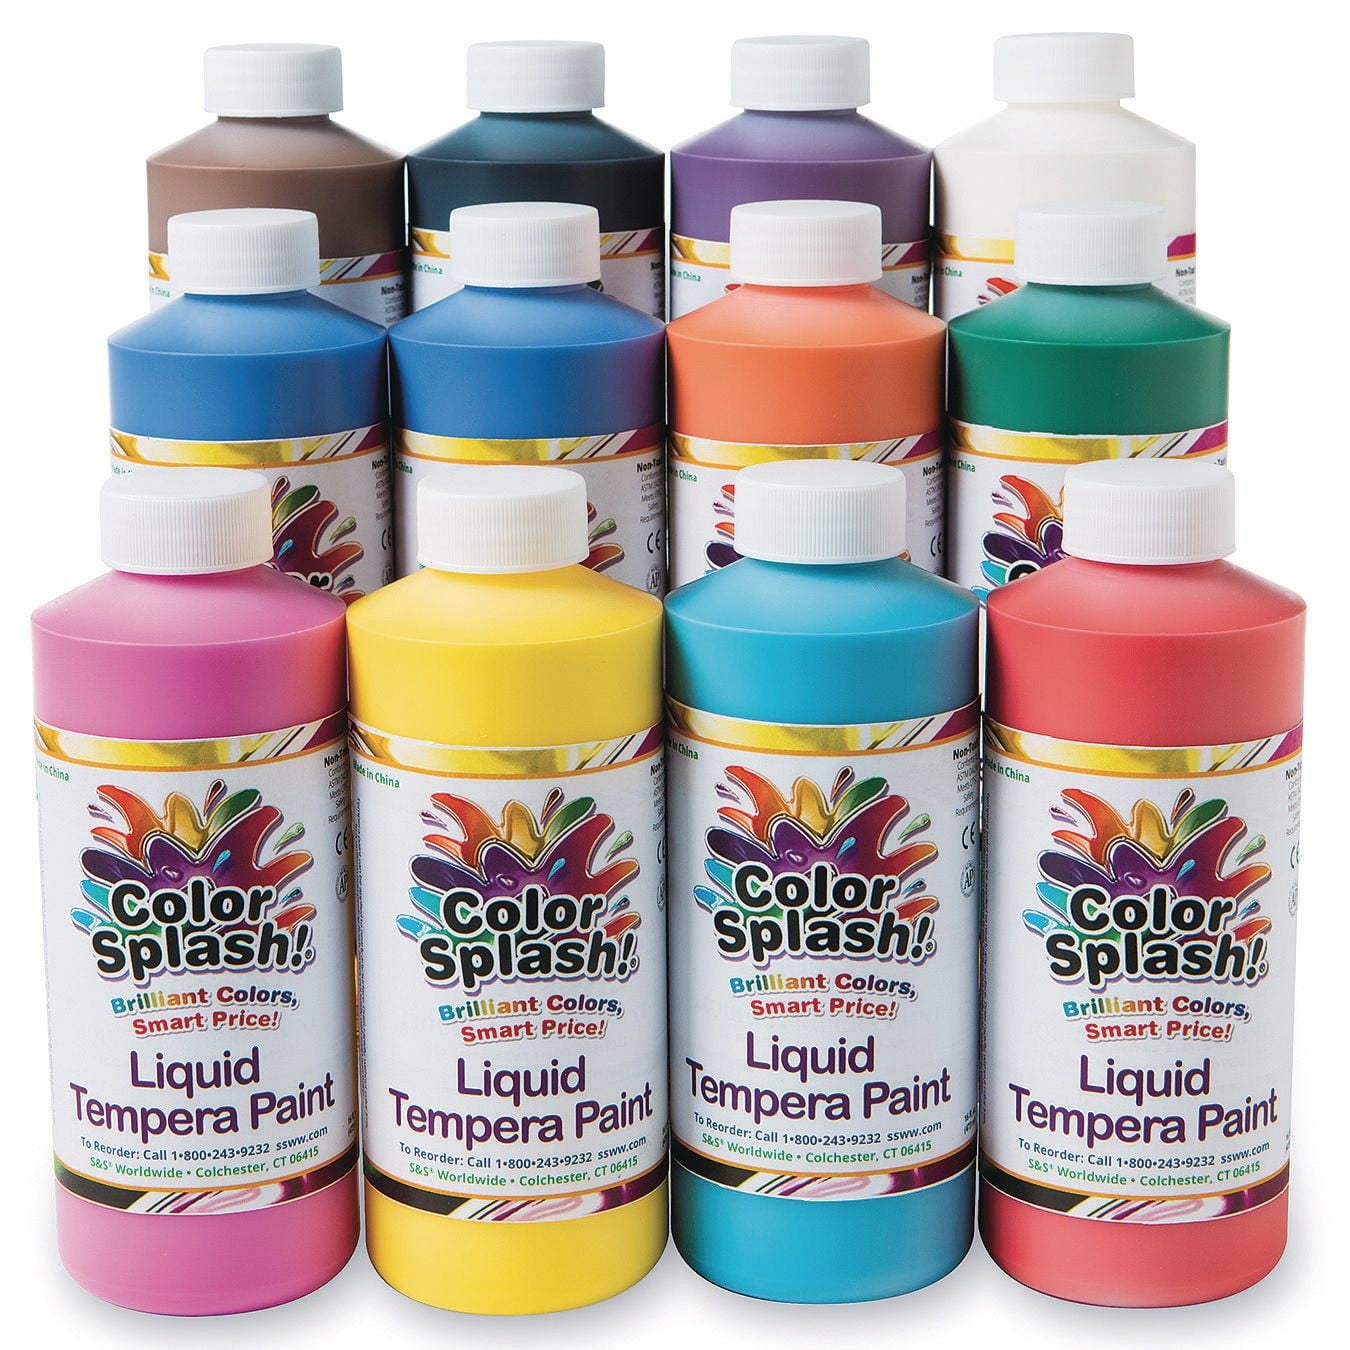 Buy Color Splash!® Big Tempera Paint Pots (Pack of 12) at S&S Worldwide